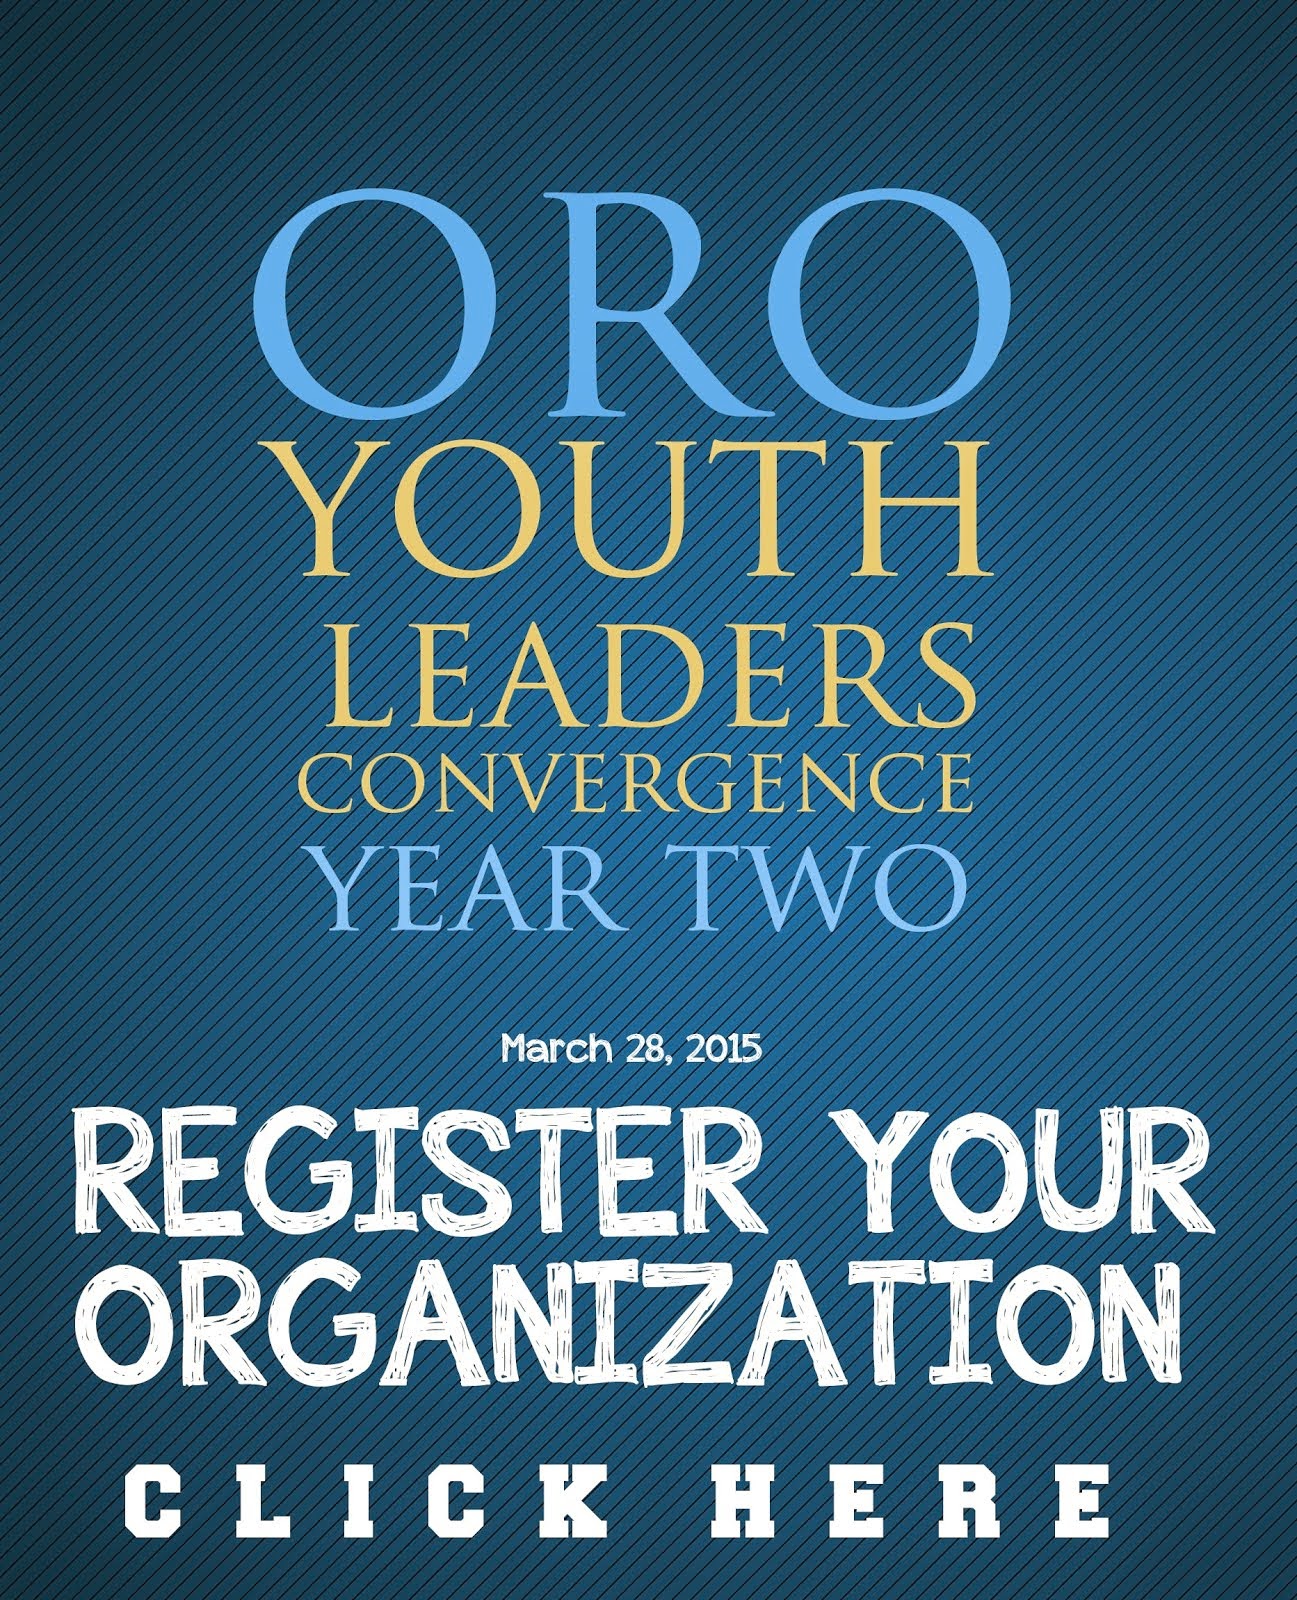 Join as an Organization